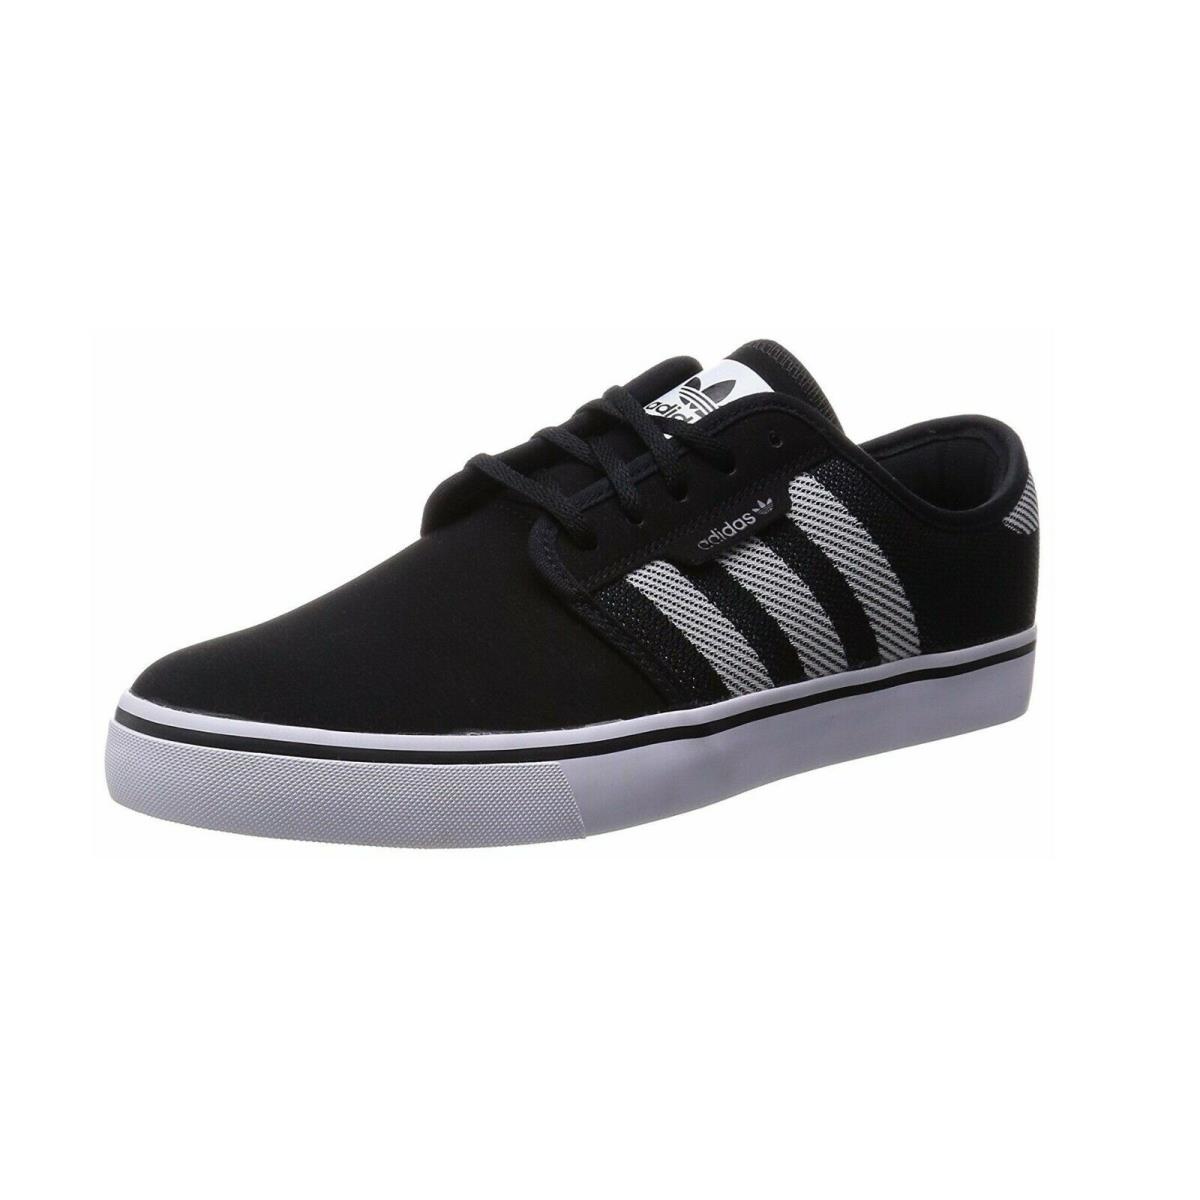 Adidas Seeley Woven Black White Black Skateboarding S85675 328 Men`s Shoes